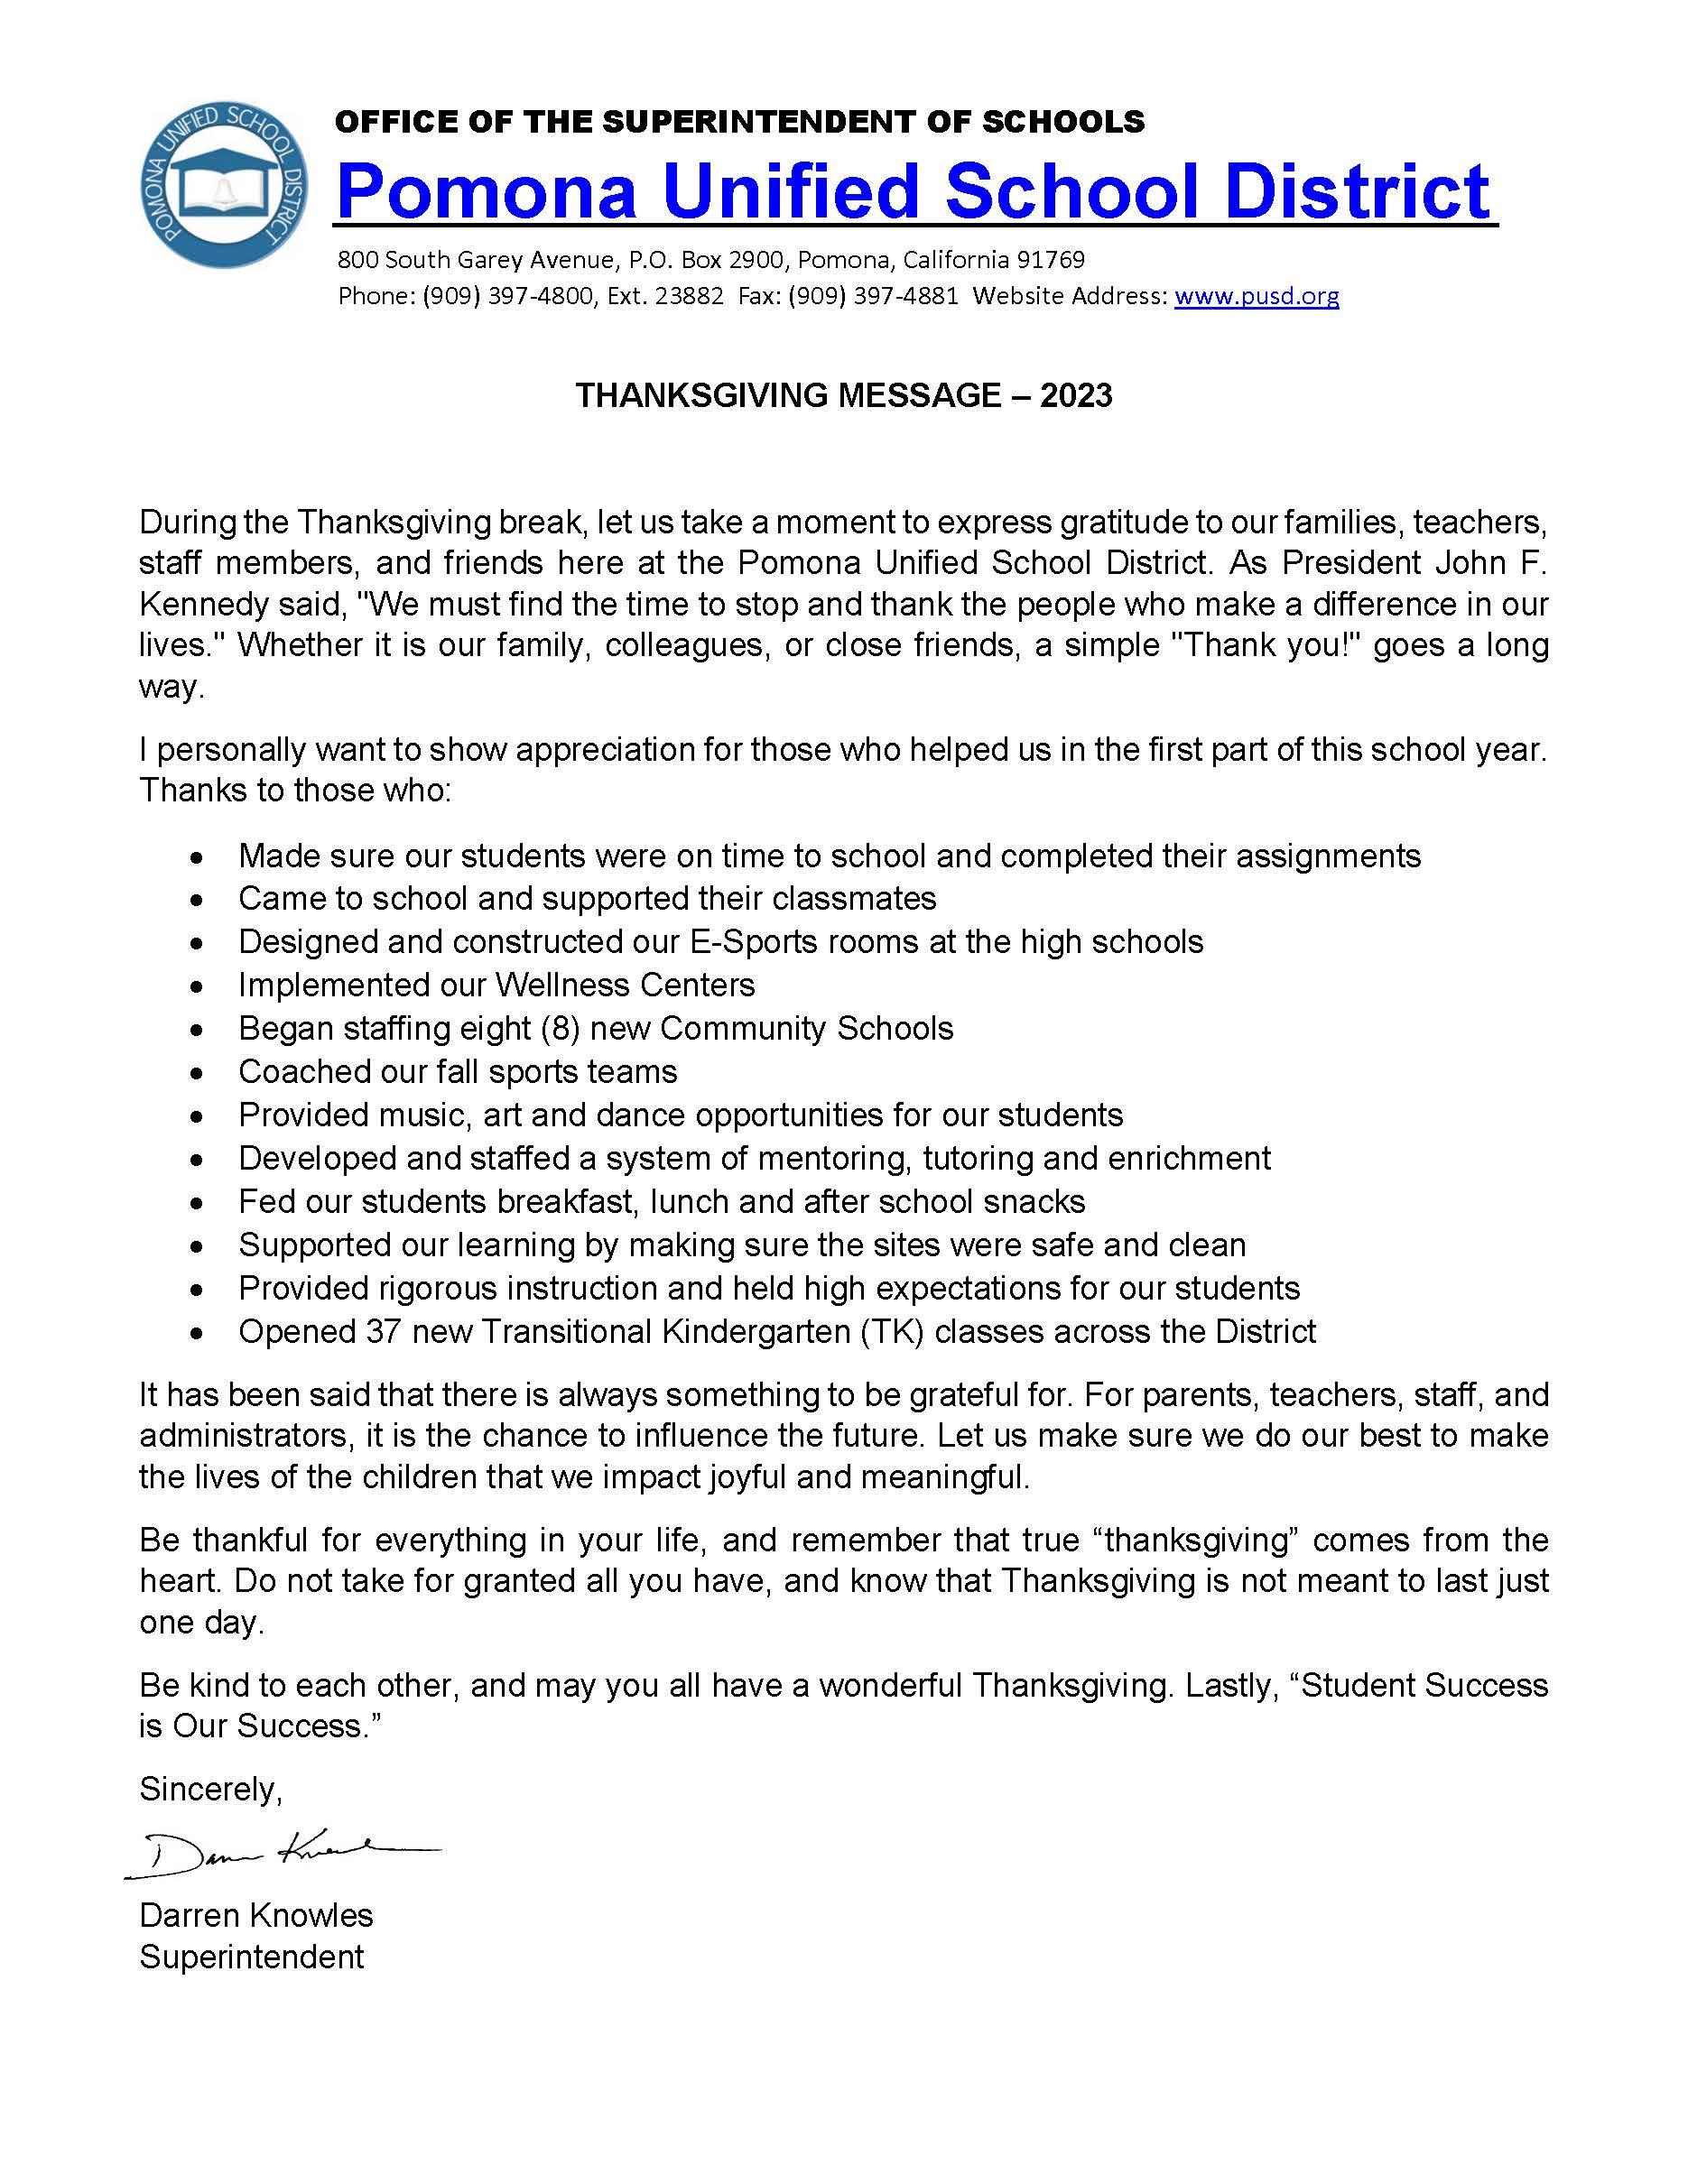 Superintendents thanksgiving message 2023- ENG